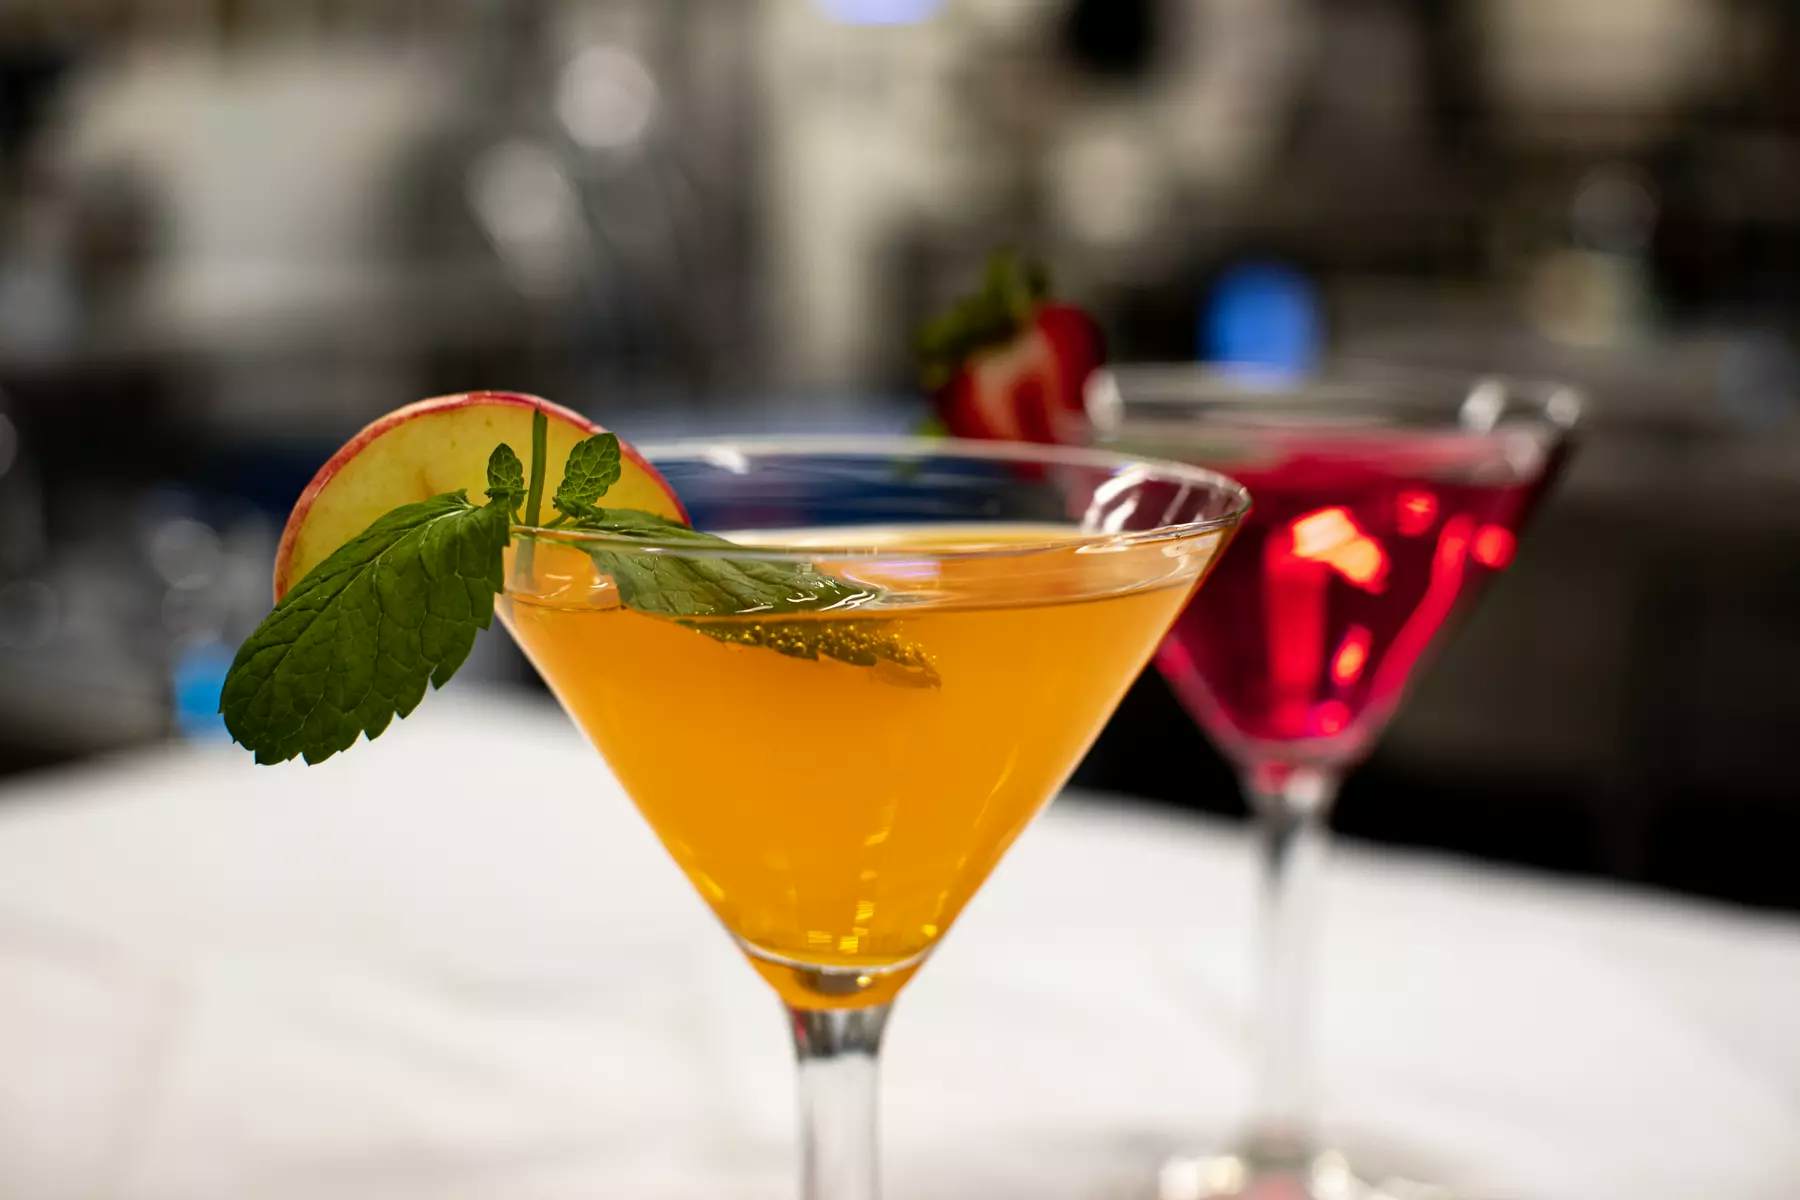 Cocktail served in martini glasses